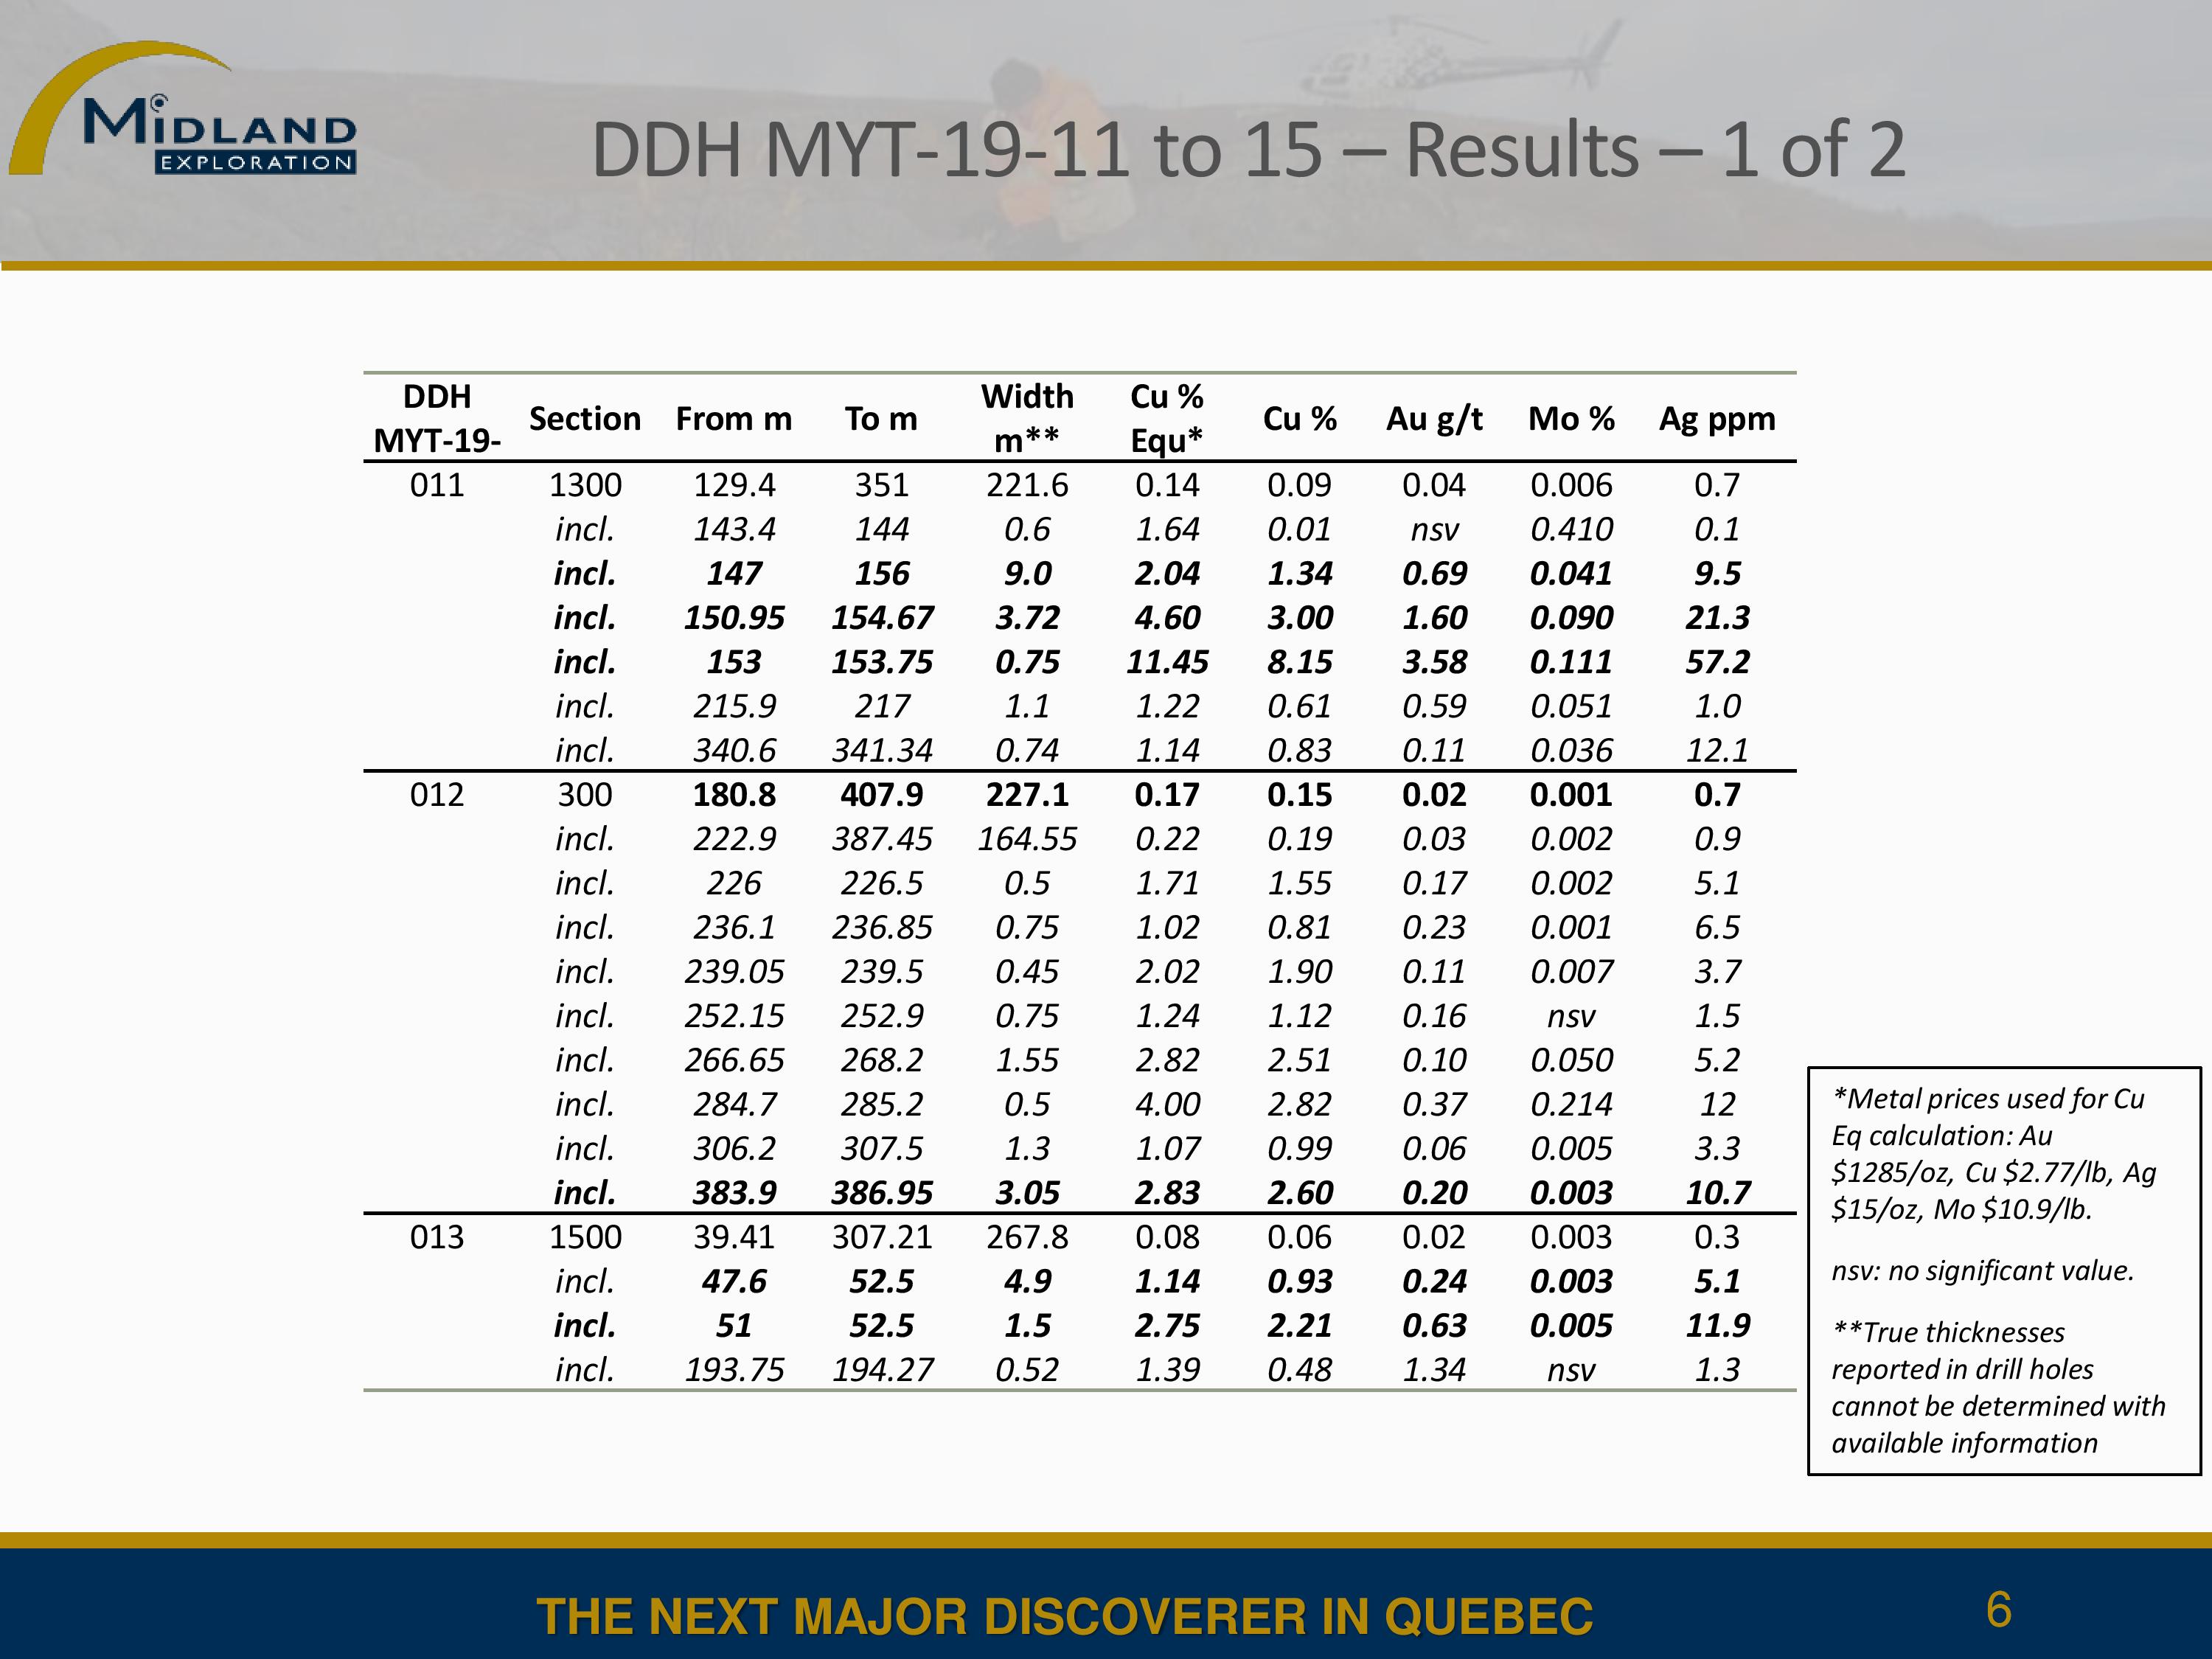 Mythril nouveaux résultats MYT-19-011 à MYT-19-015